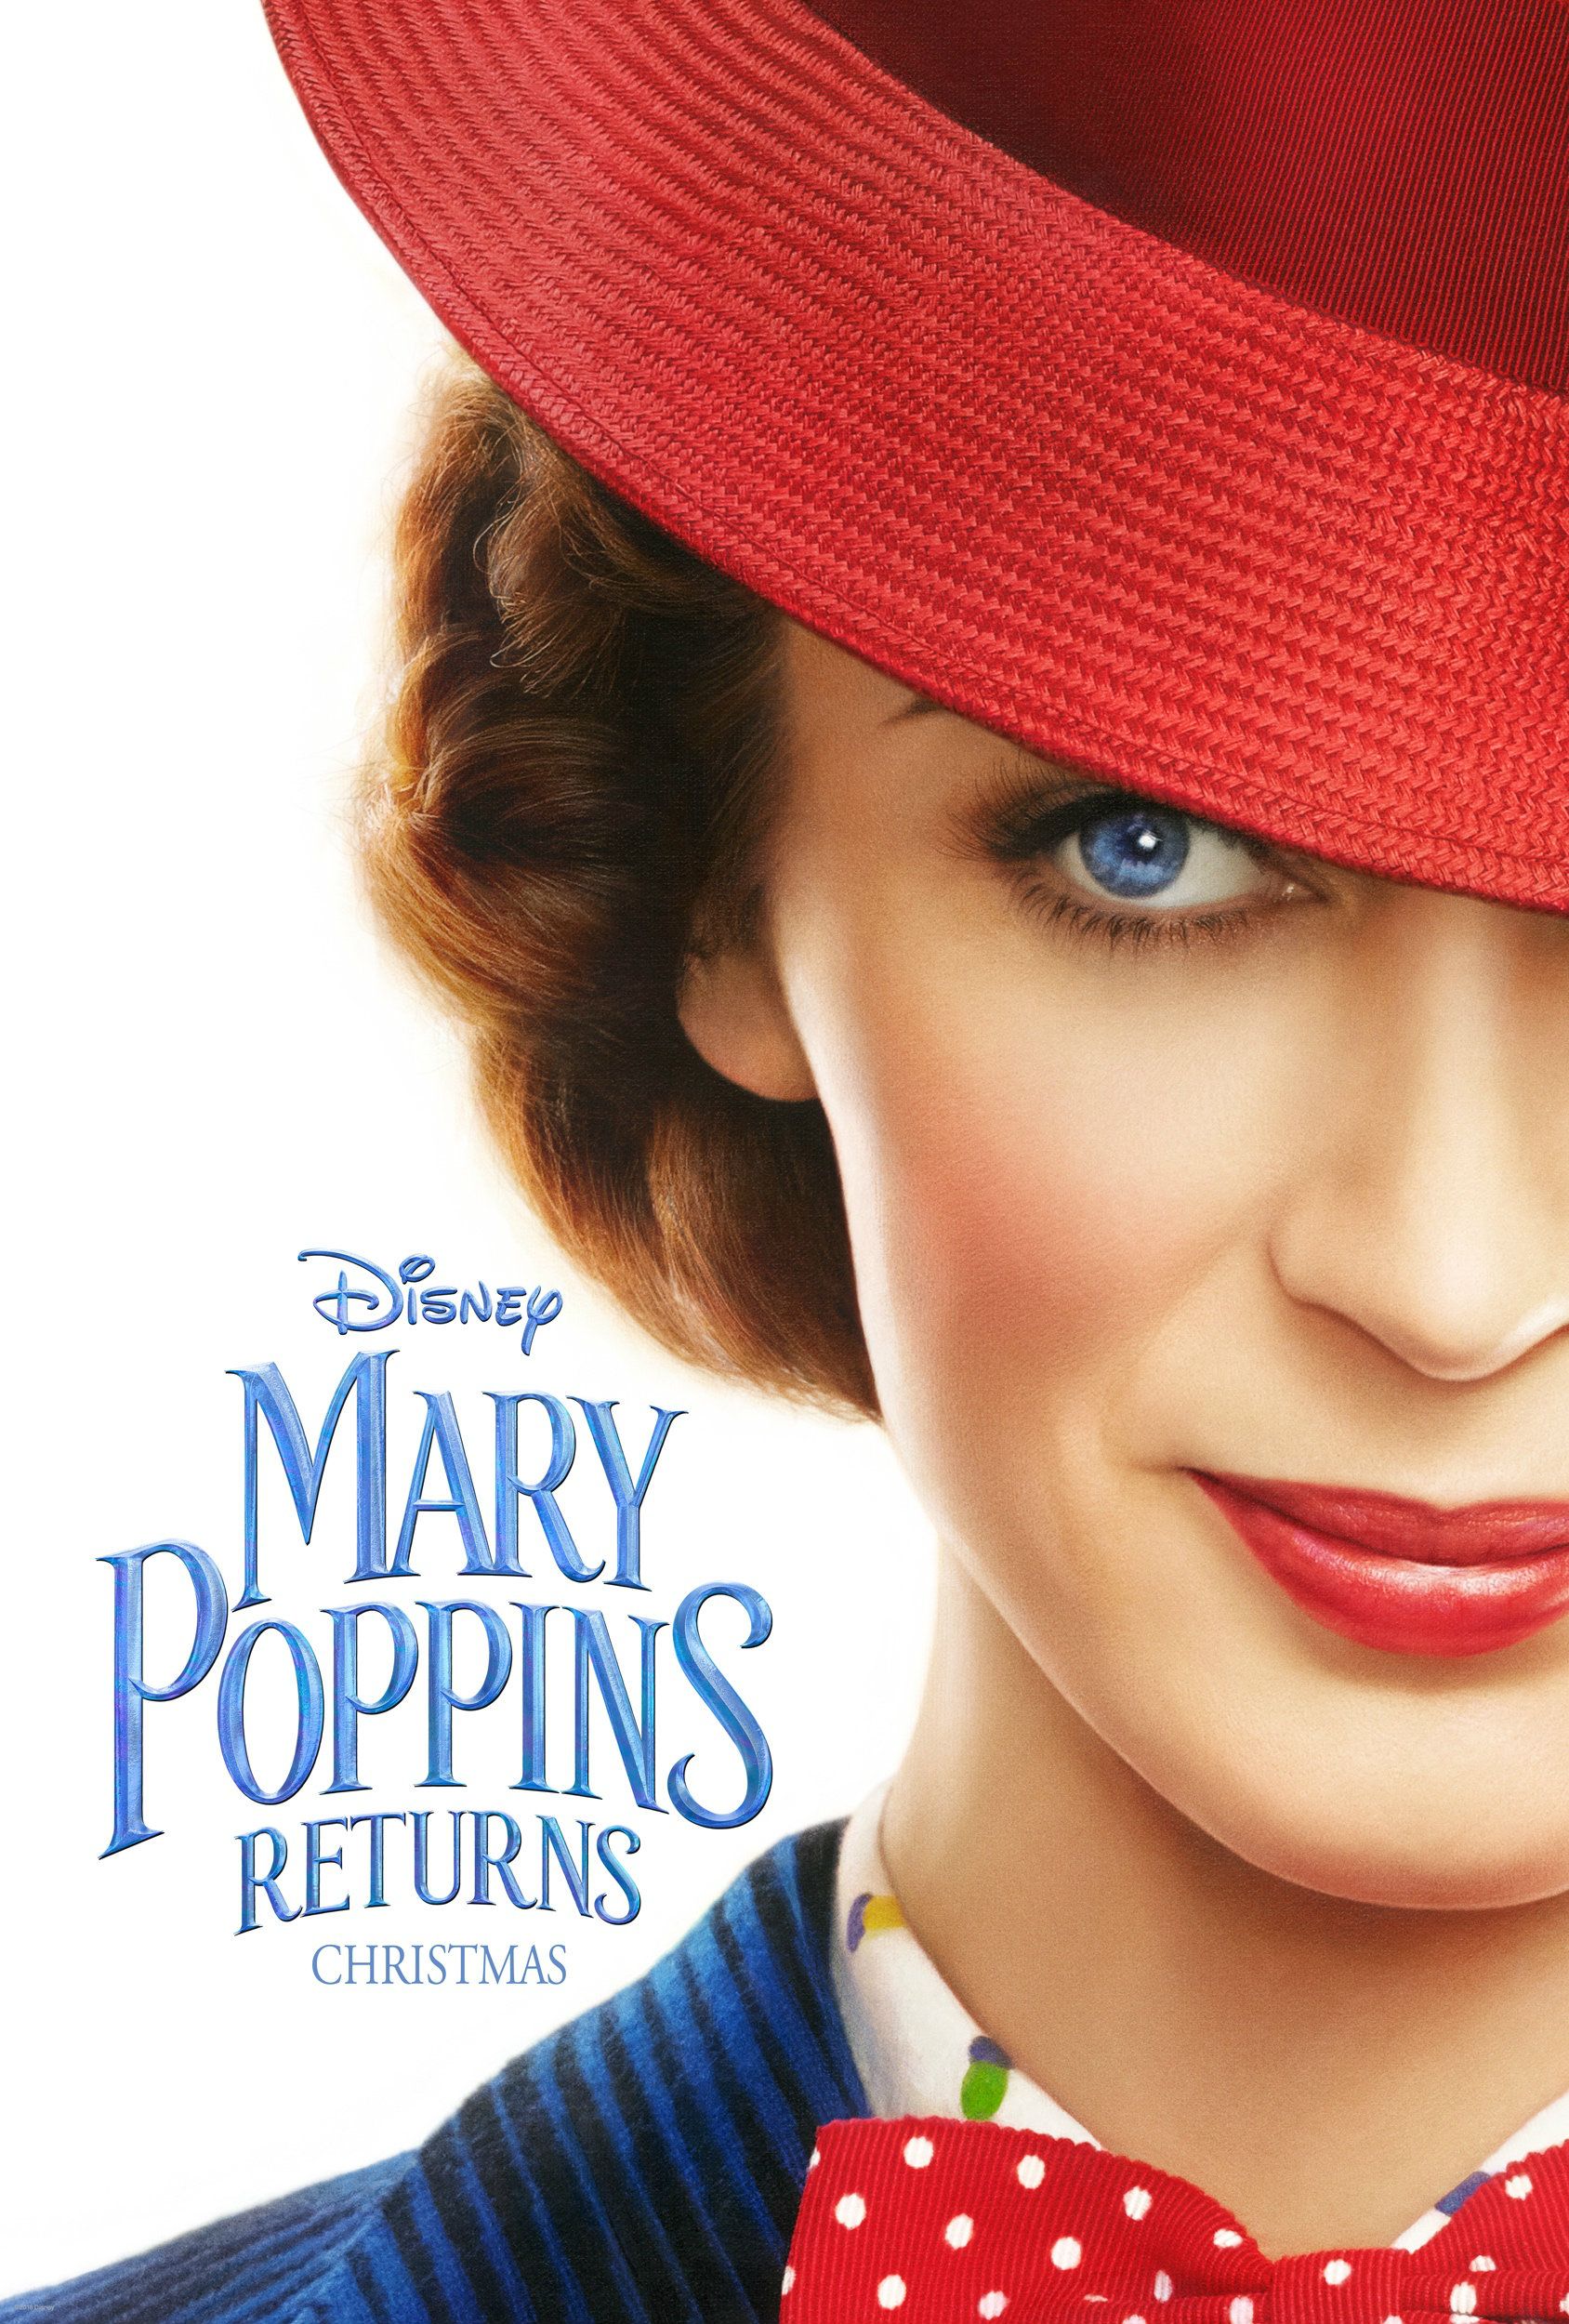 Mary Poppins Returns Set Photos: Emily Blunt & Lin-Manuel Miranda in Costume